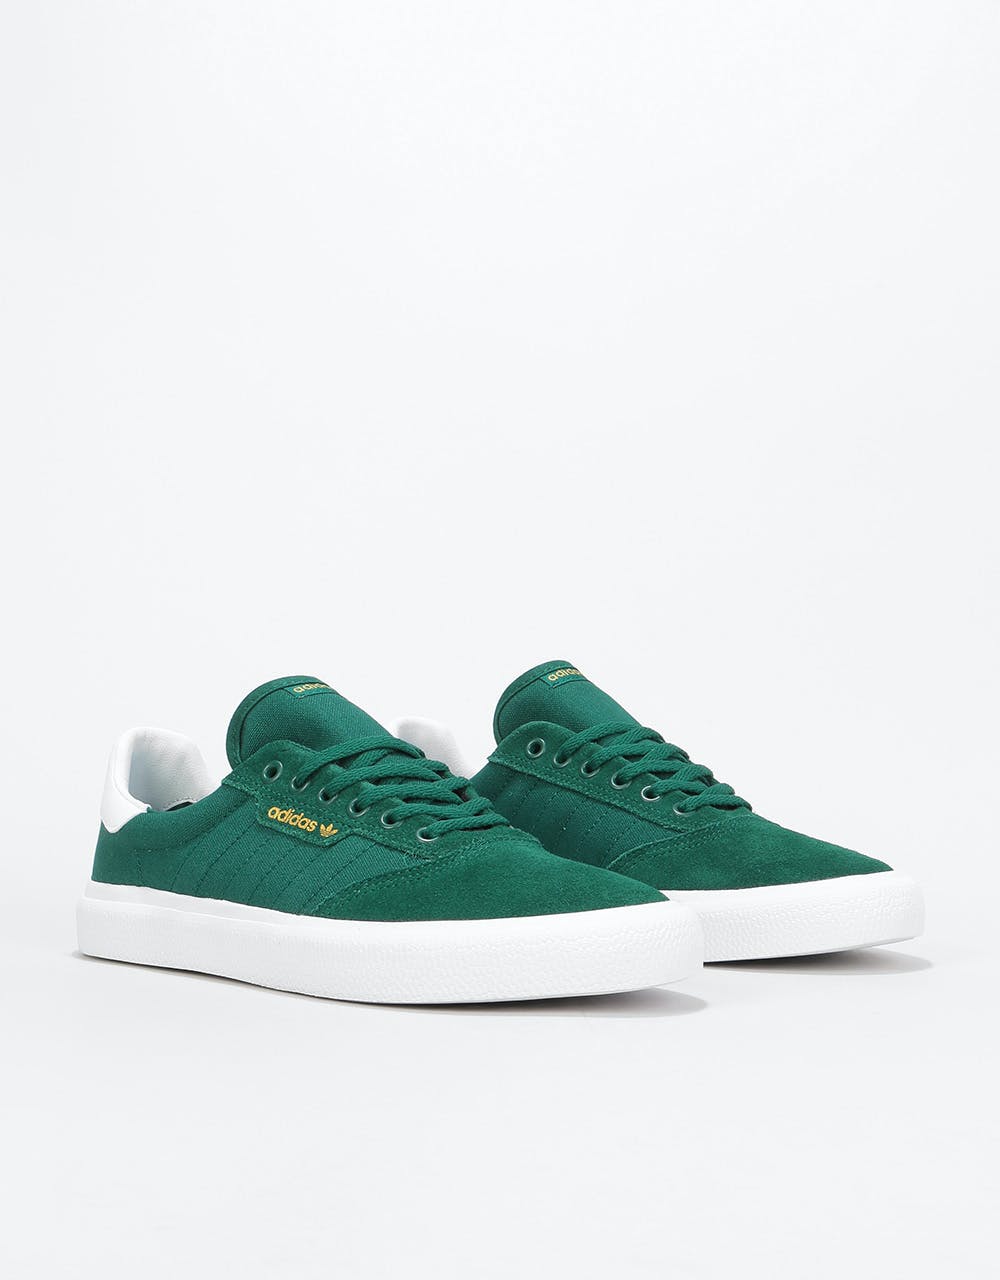 Adidas 3MC Skate Shoes - Collegiate Green/White/Collegiate Green